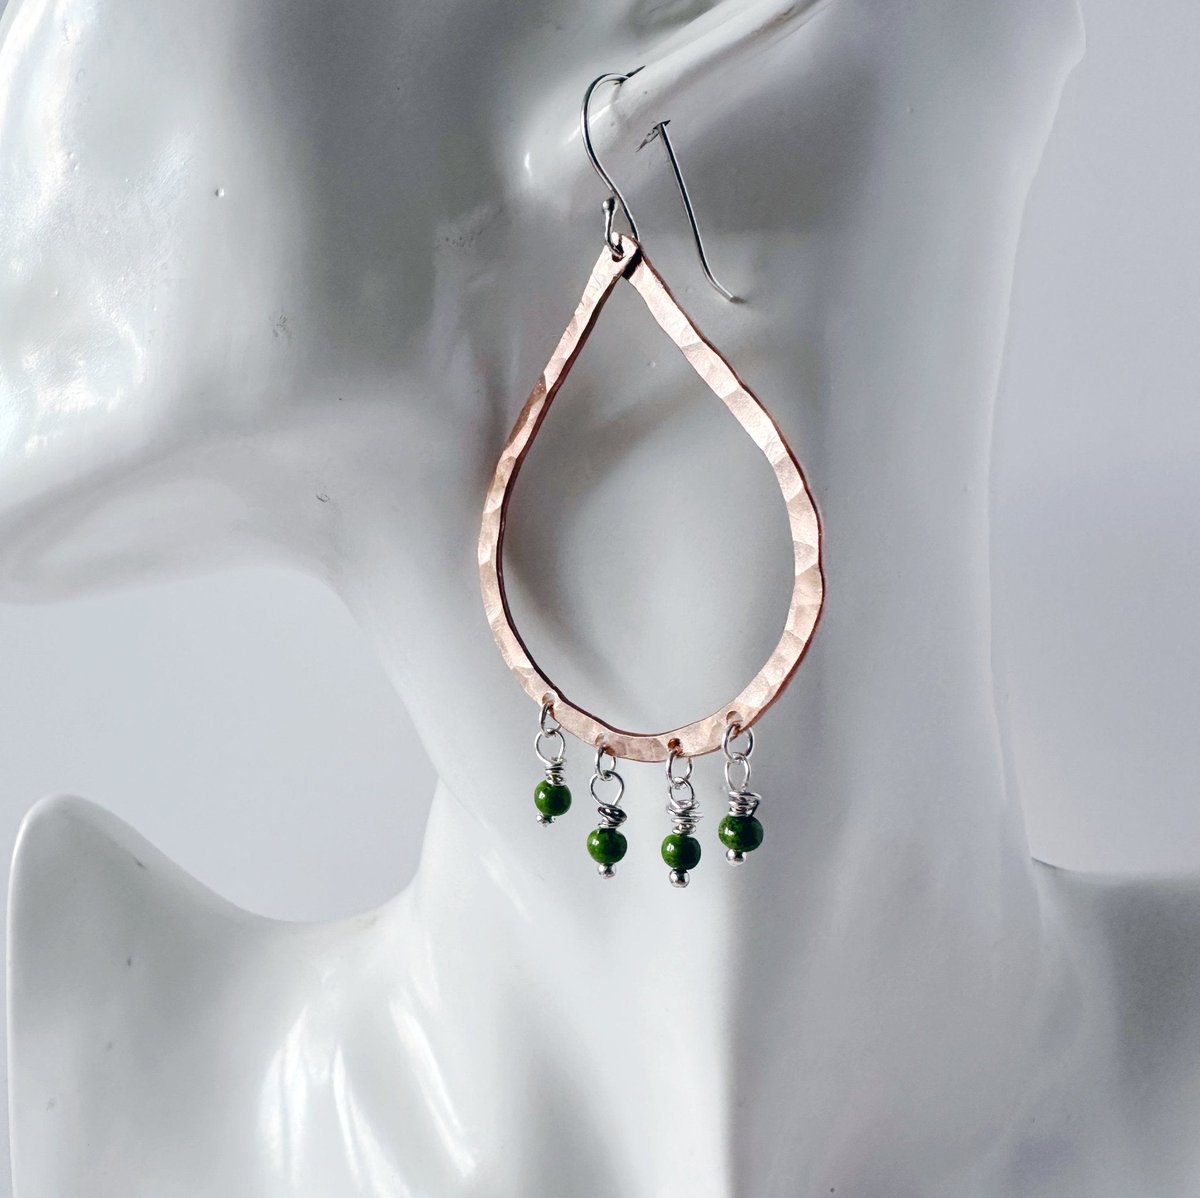 Copper Teardrop Statement Earrings with Enamel Beads tuppu.net/b0e9a32 ##UKGiftHour #HandmadeHour #bizbubble #shopsmall #UKHashtags #MHHSBD #inbizhour #giftideas #Teardrop